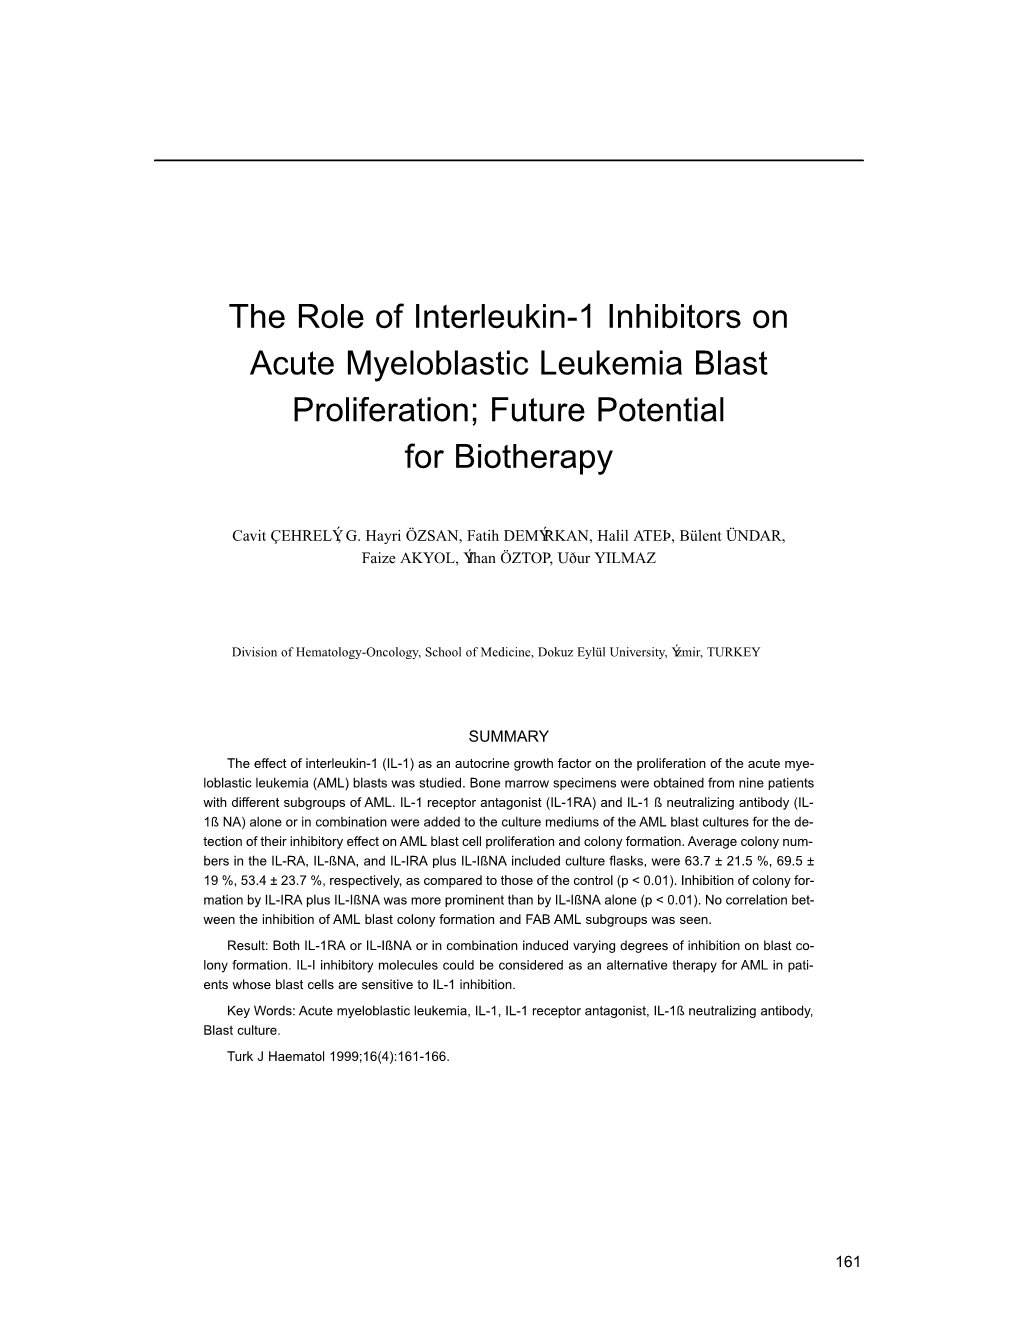 The Role of Interleukin-1 Inhibitors on Acute Myeloblastic Leukemia Blast Proliferation; Future Potential for Biotherapy